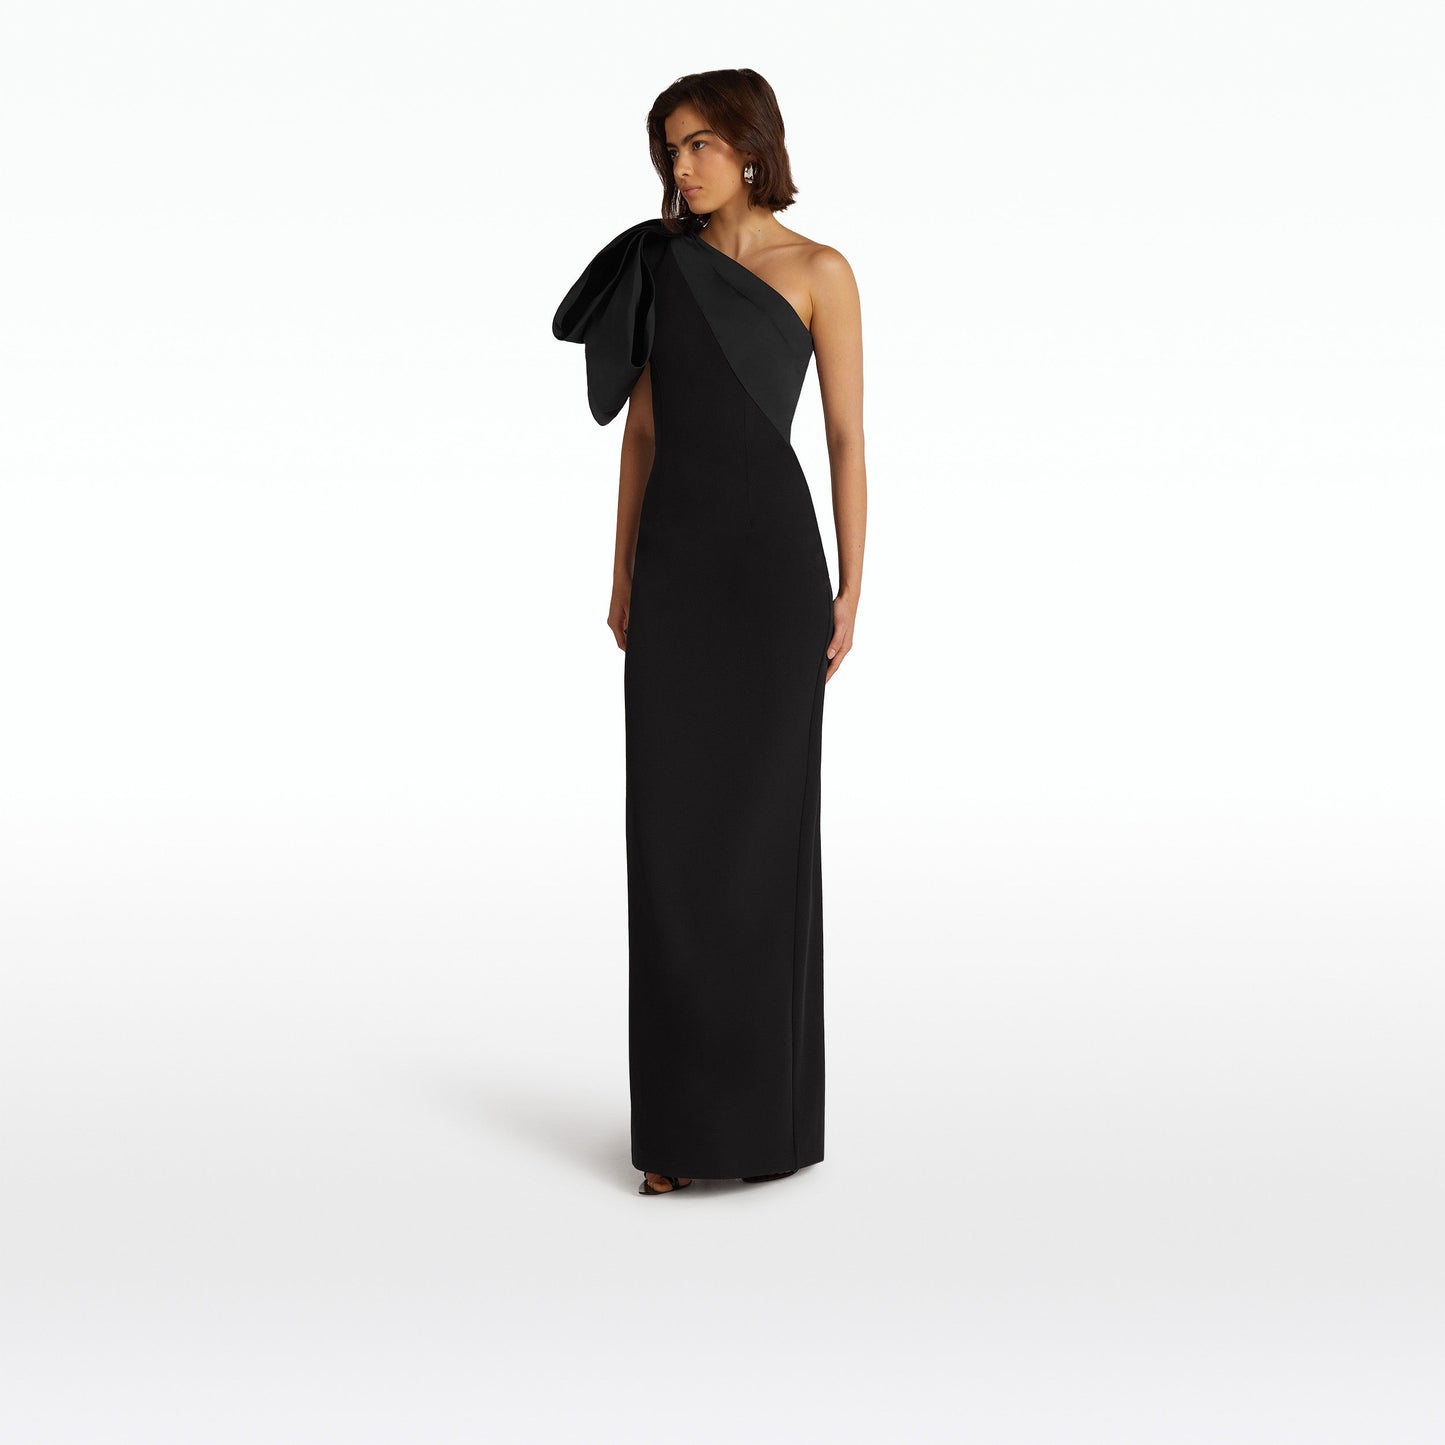 Maelys Black Long Dress